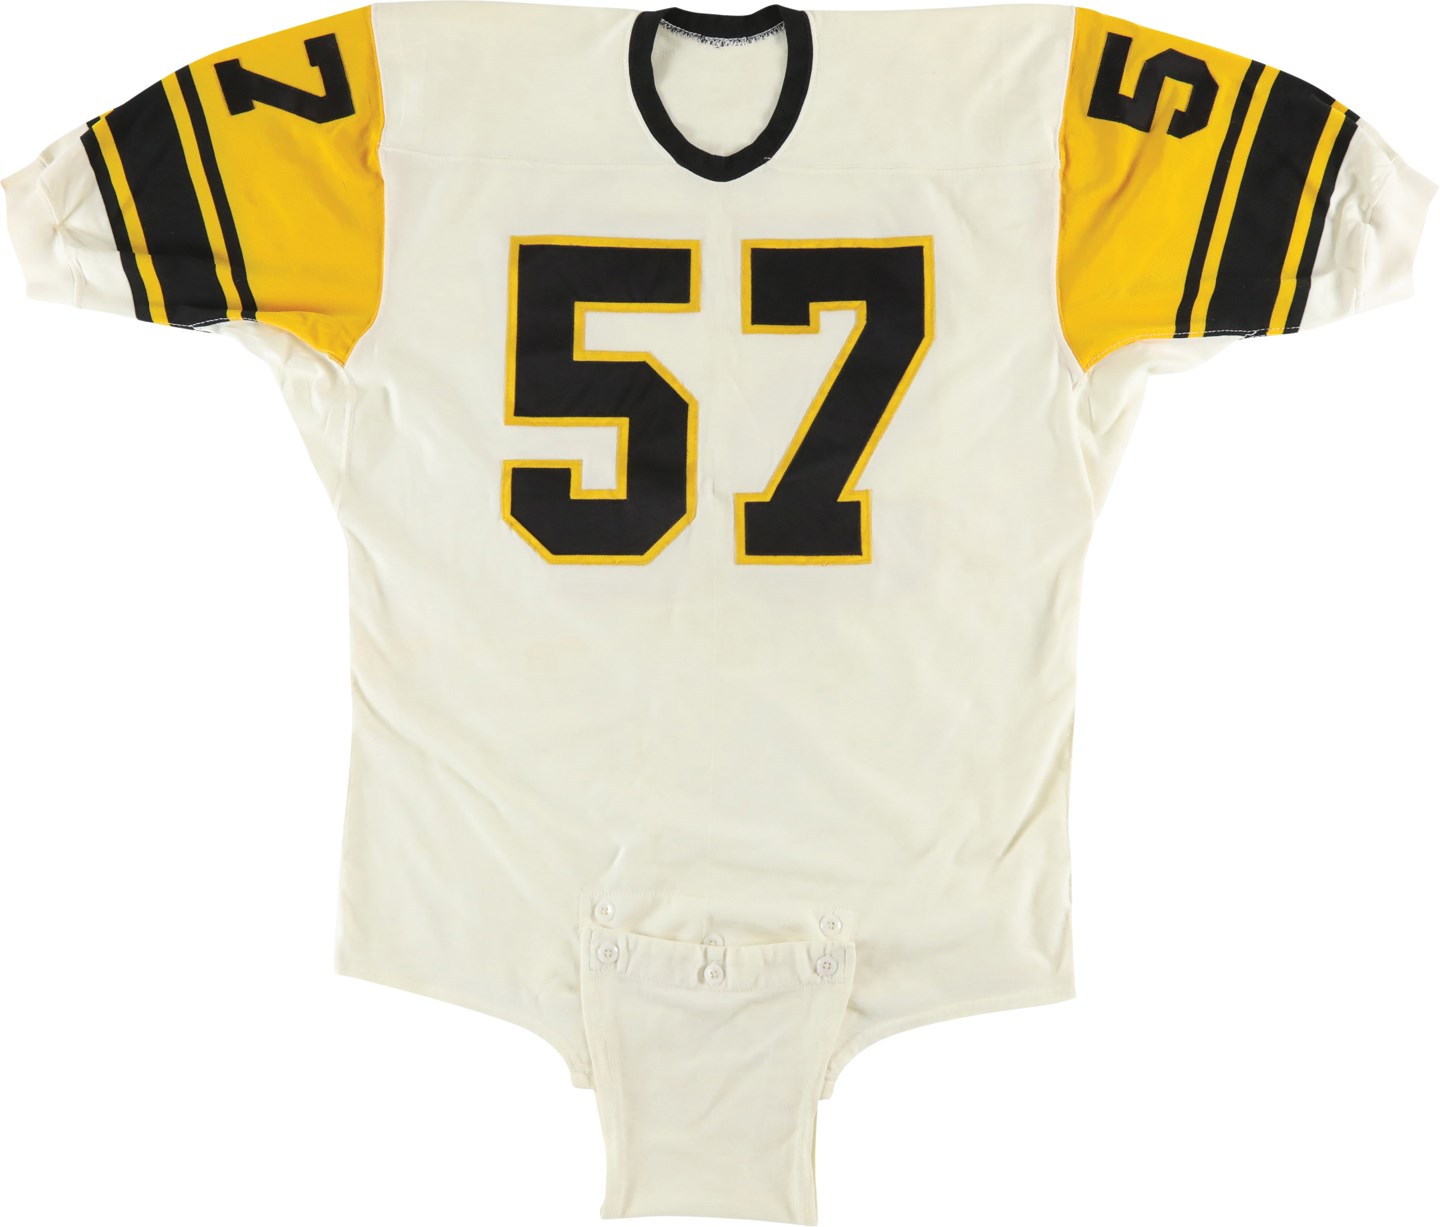 Football - Circa 1964 Pittsburgh Steelers #57 Game Worn Jersey